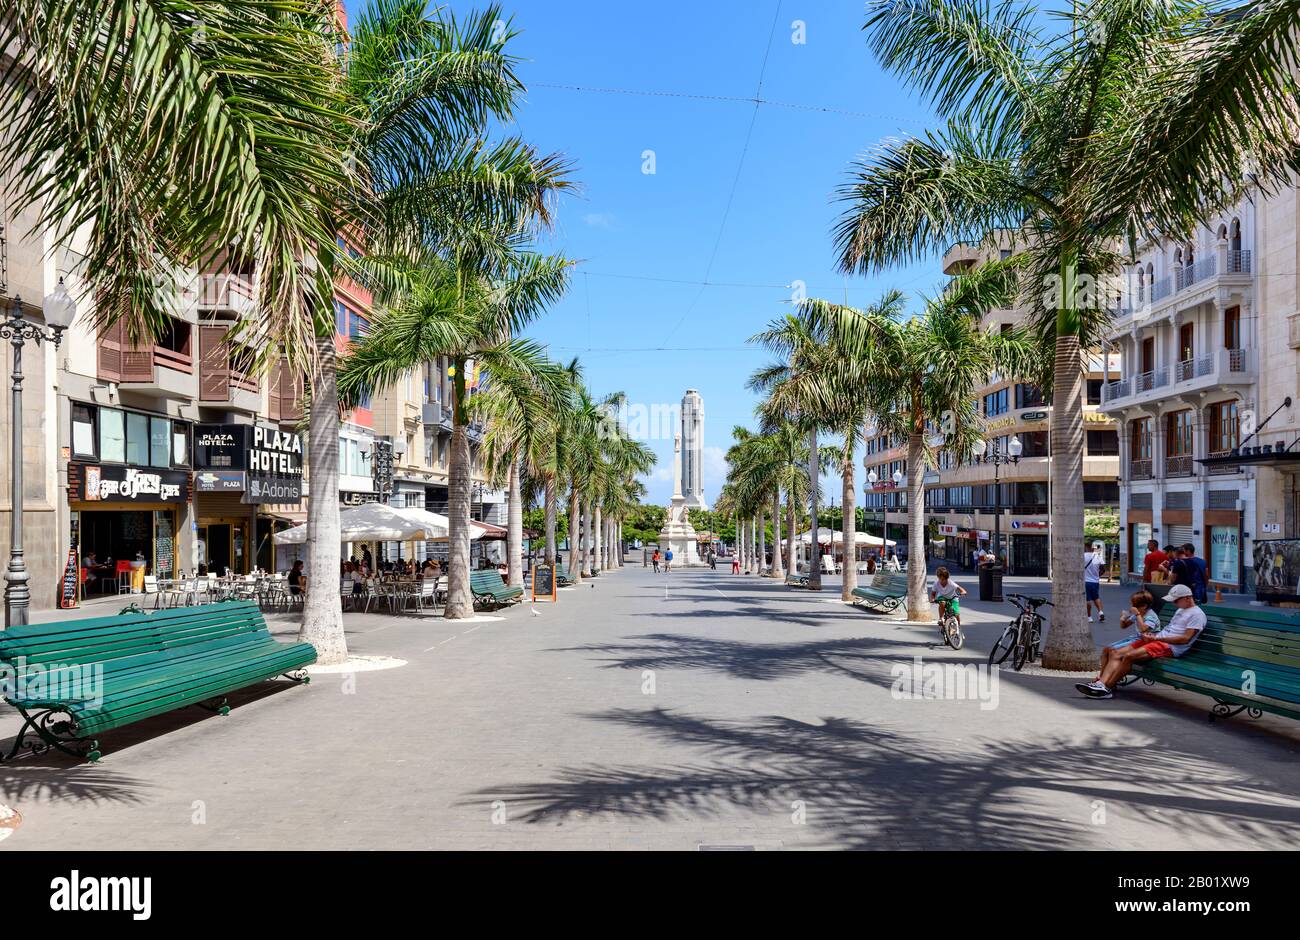 Plaza de la Candelaria. A picturesque mainly pedestrianised palm tree lined street Santa Cruz de Tenerife, Canary Islands. Stock Photo